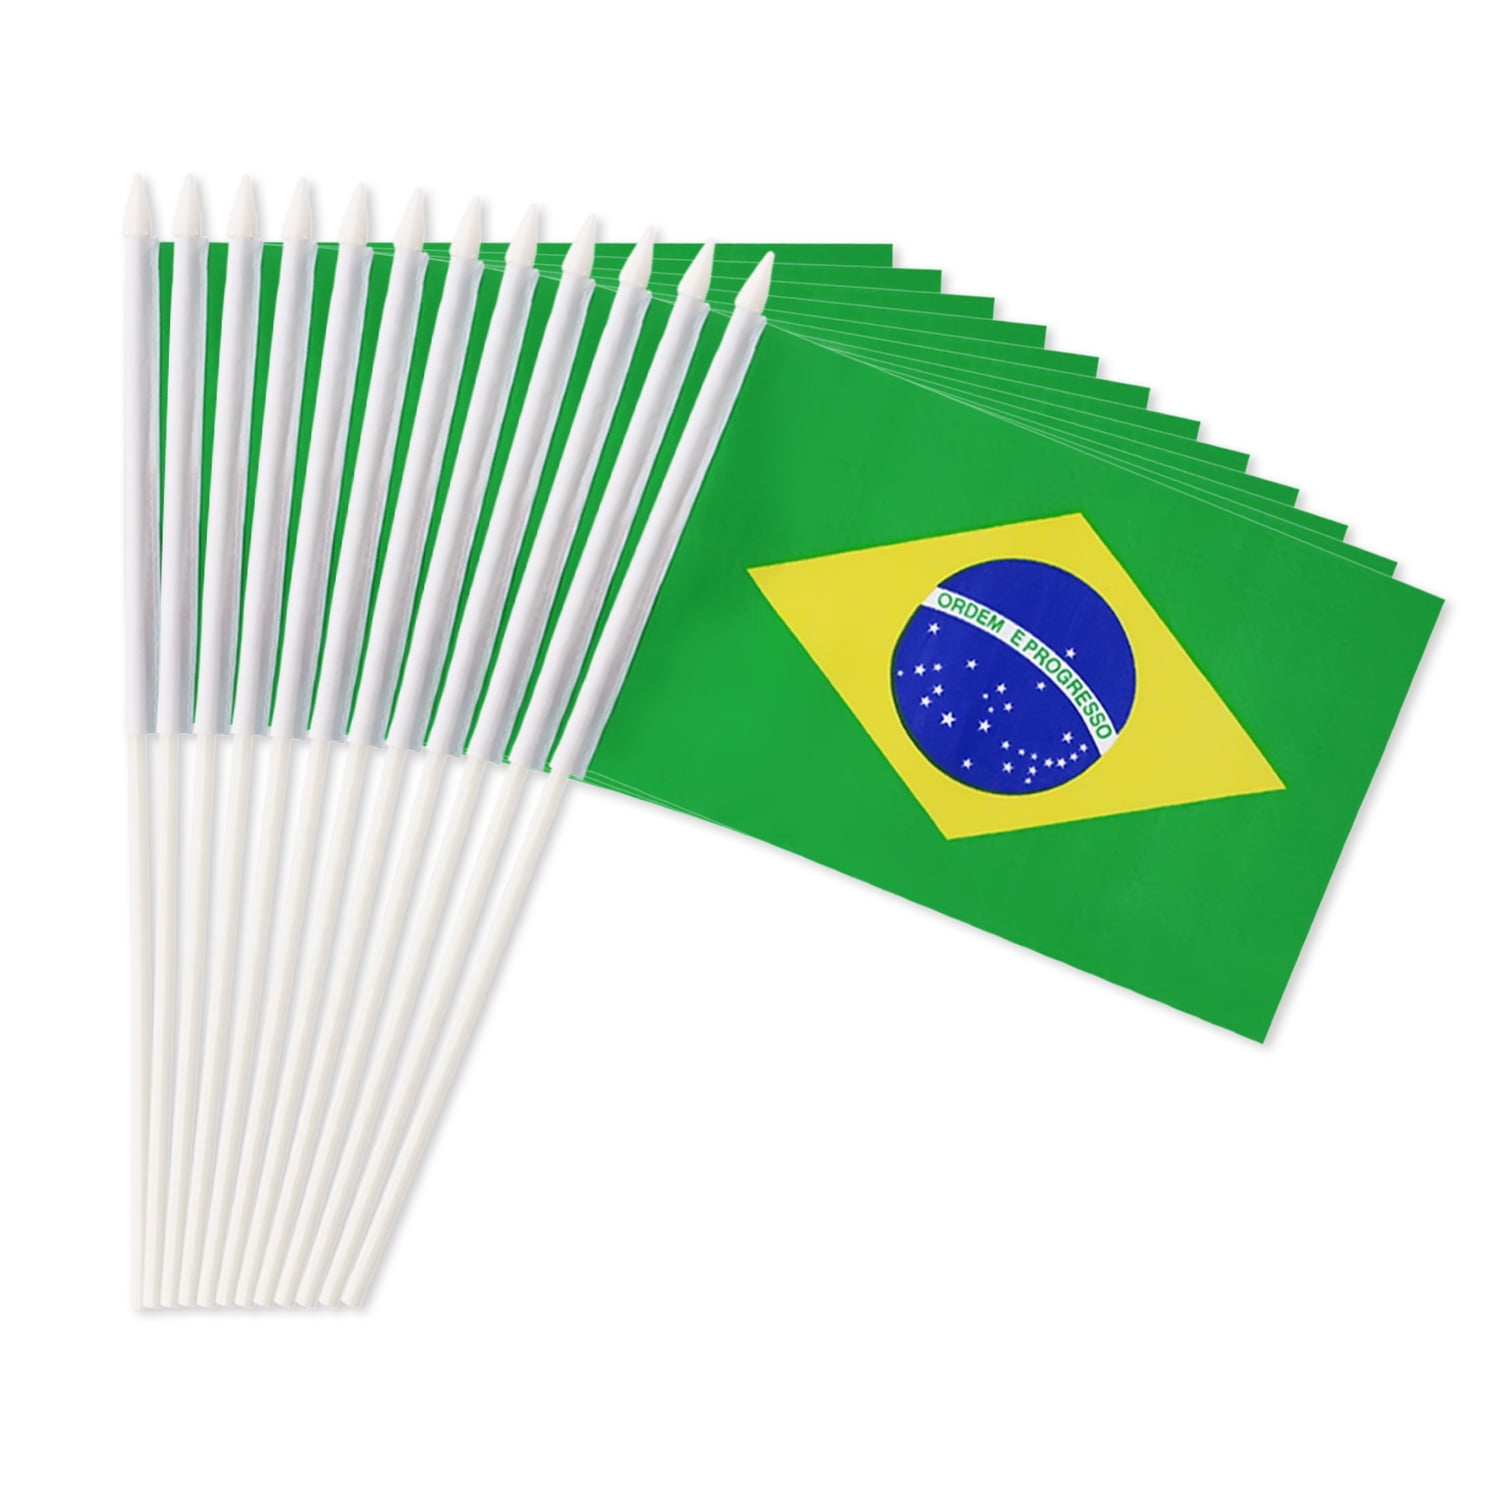 BRAZIL flag Brazilian flag country  world cup flag 3x5